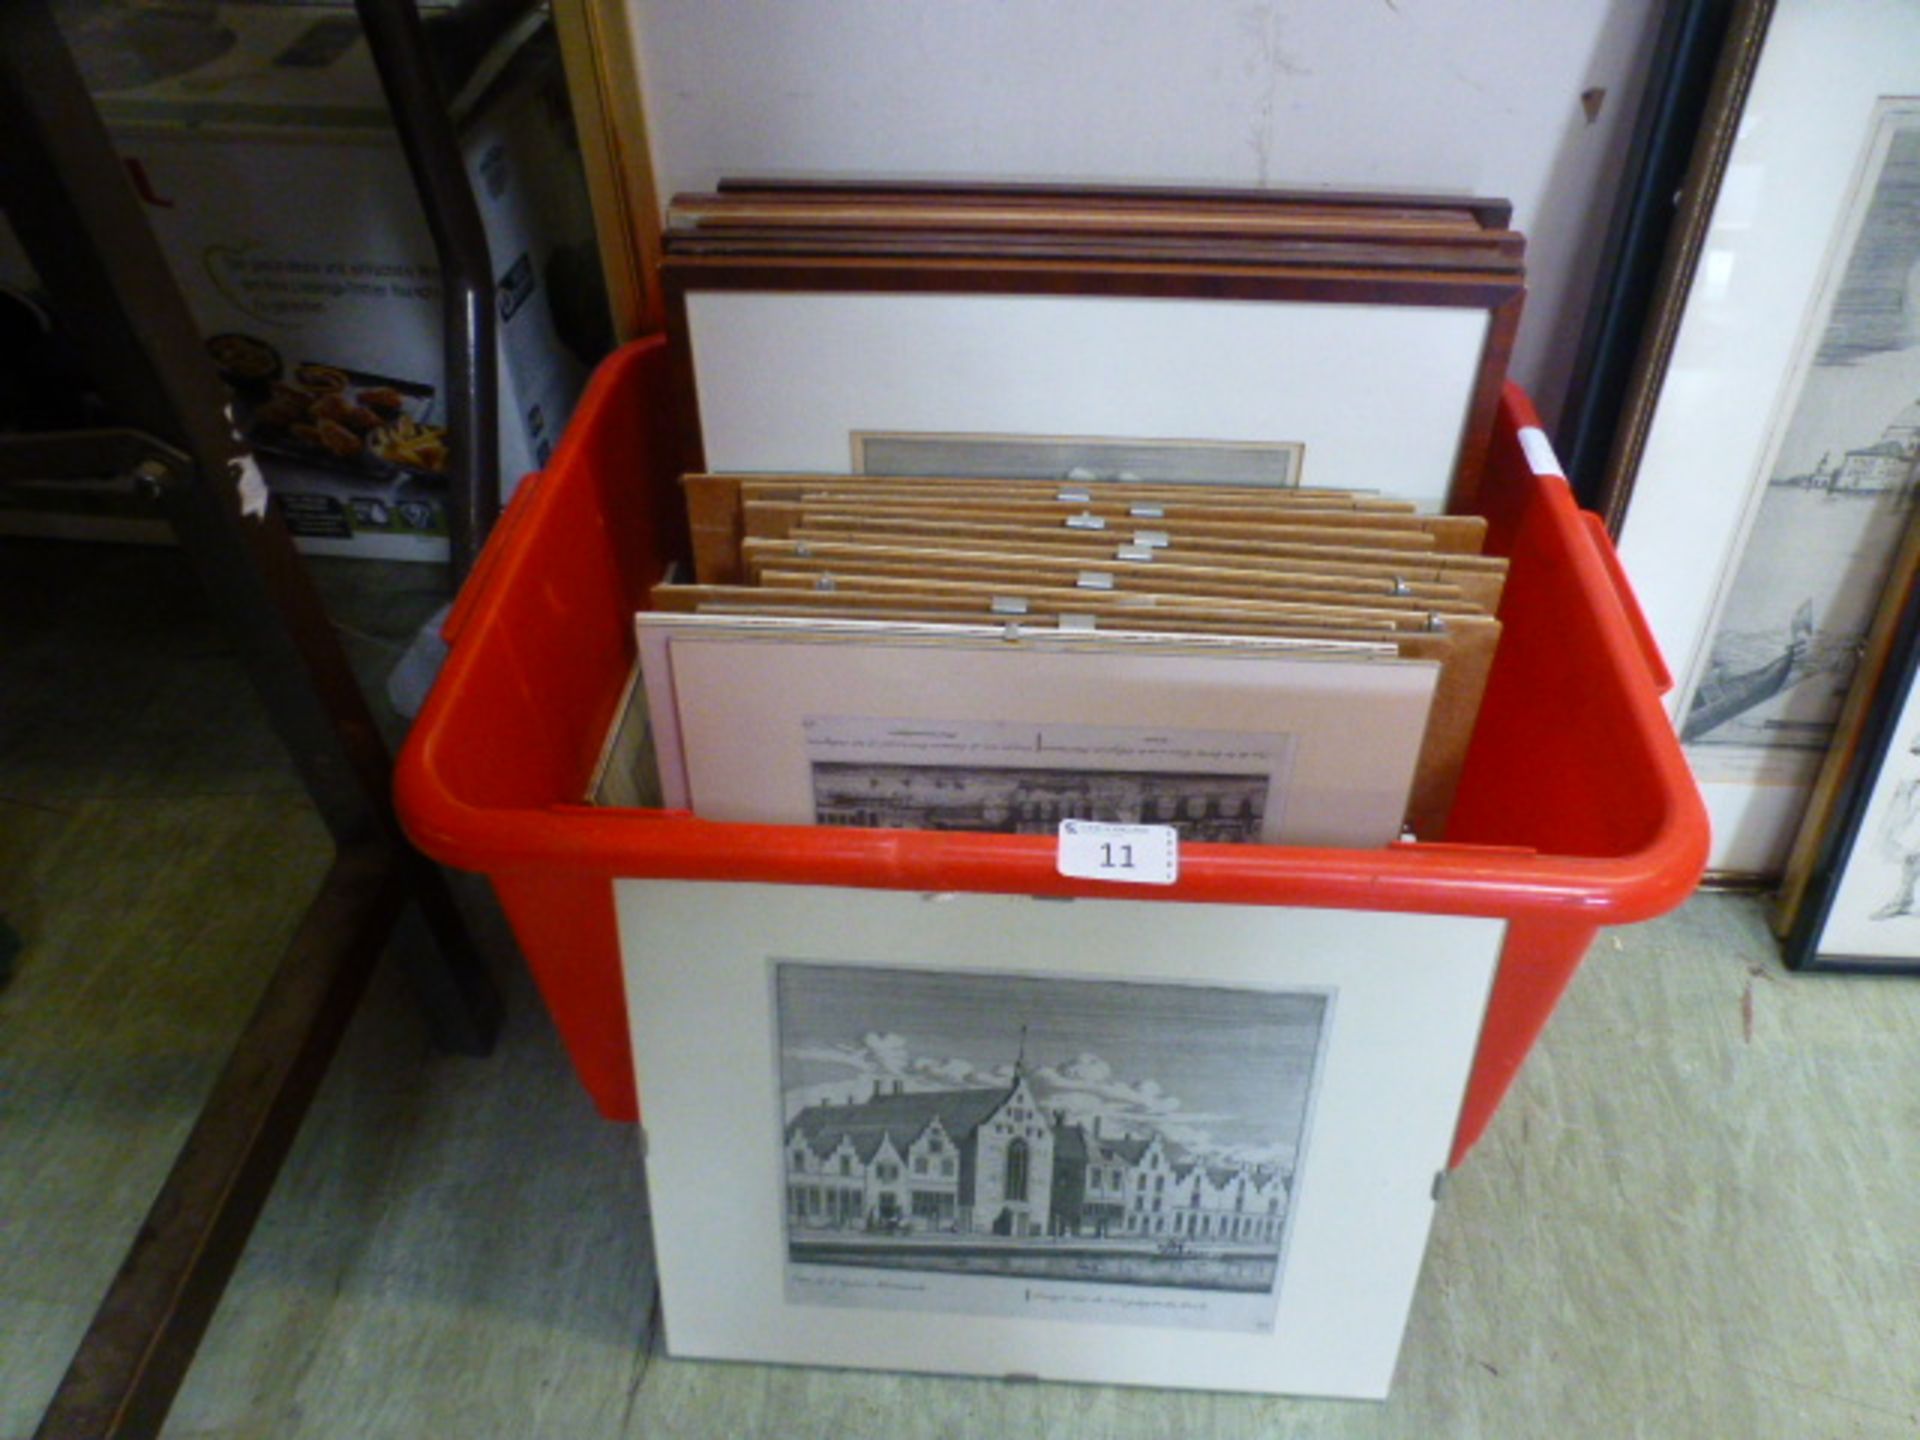 A box containing a quantity of prints, m